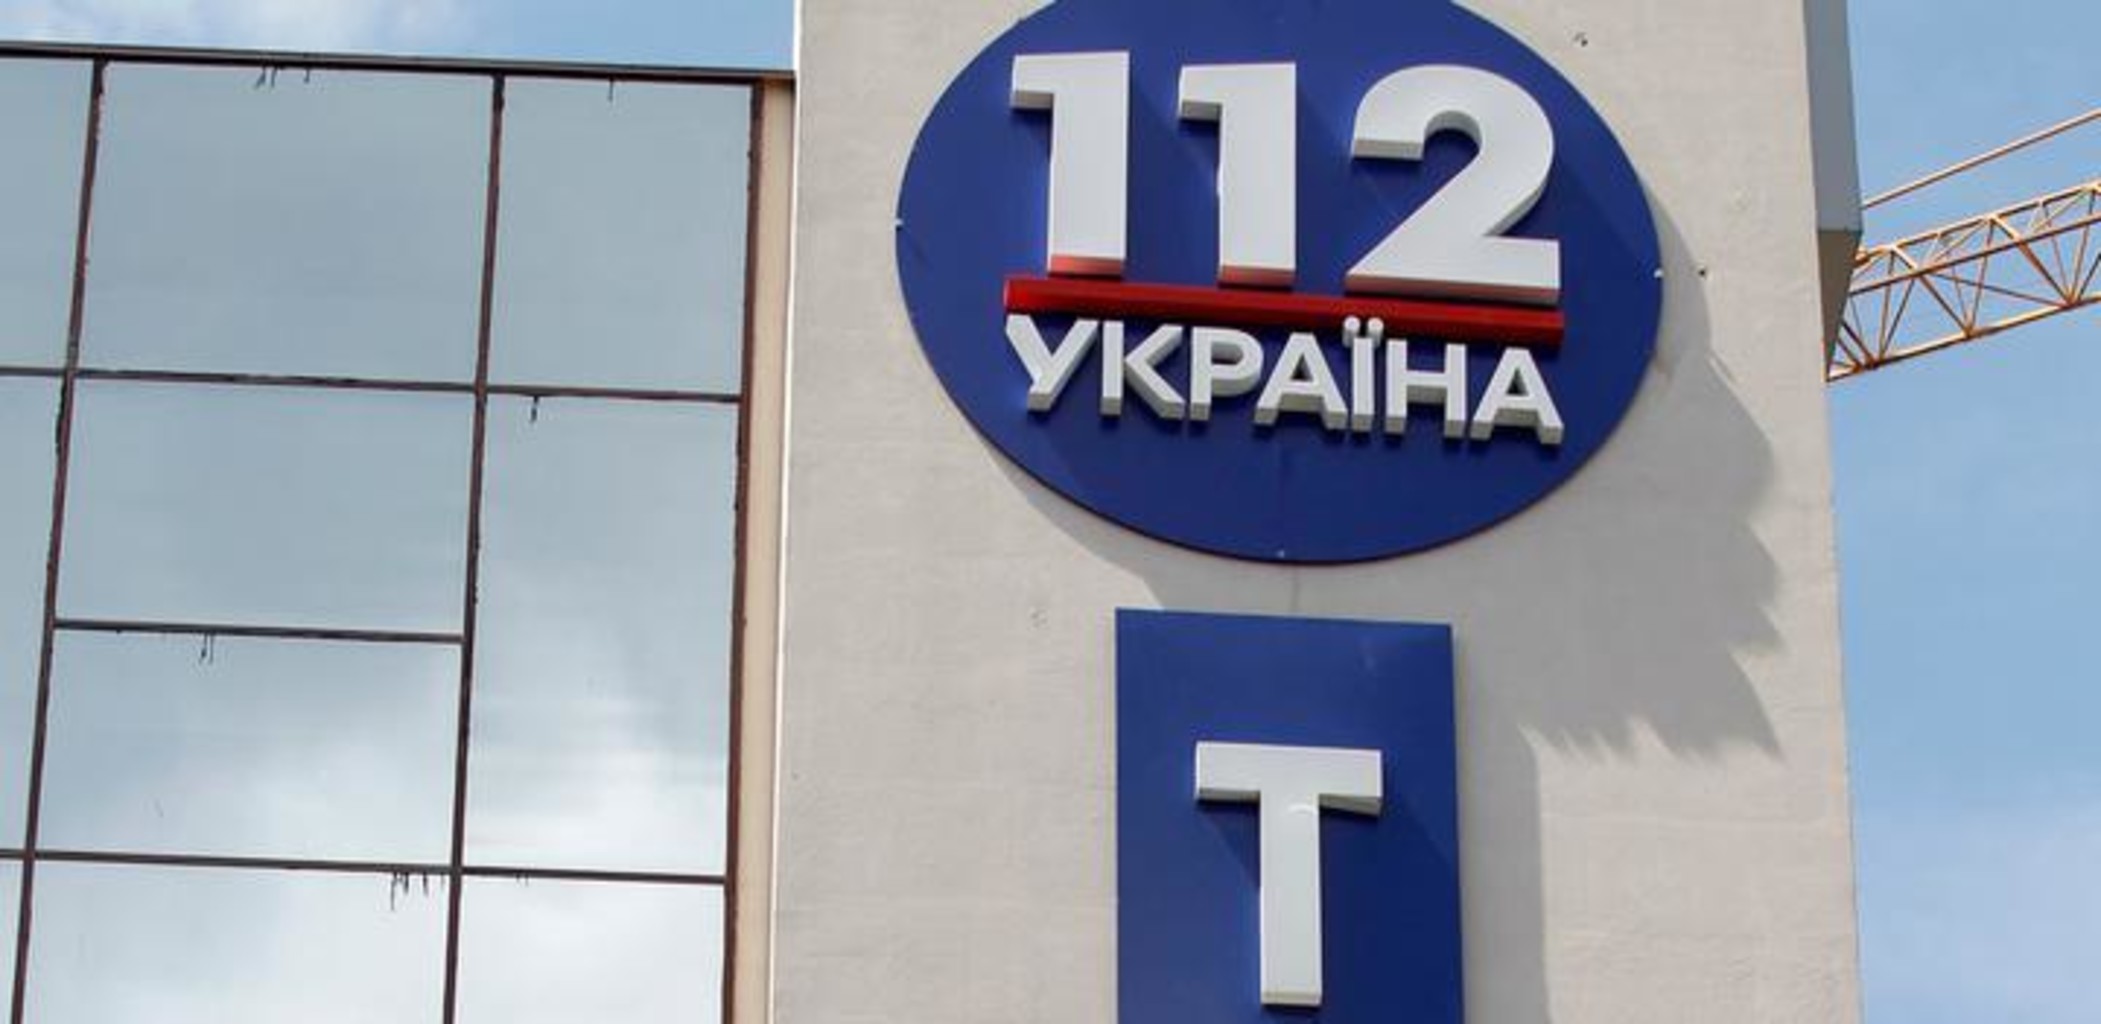 112 ukraina logo